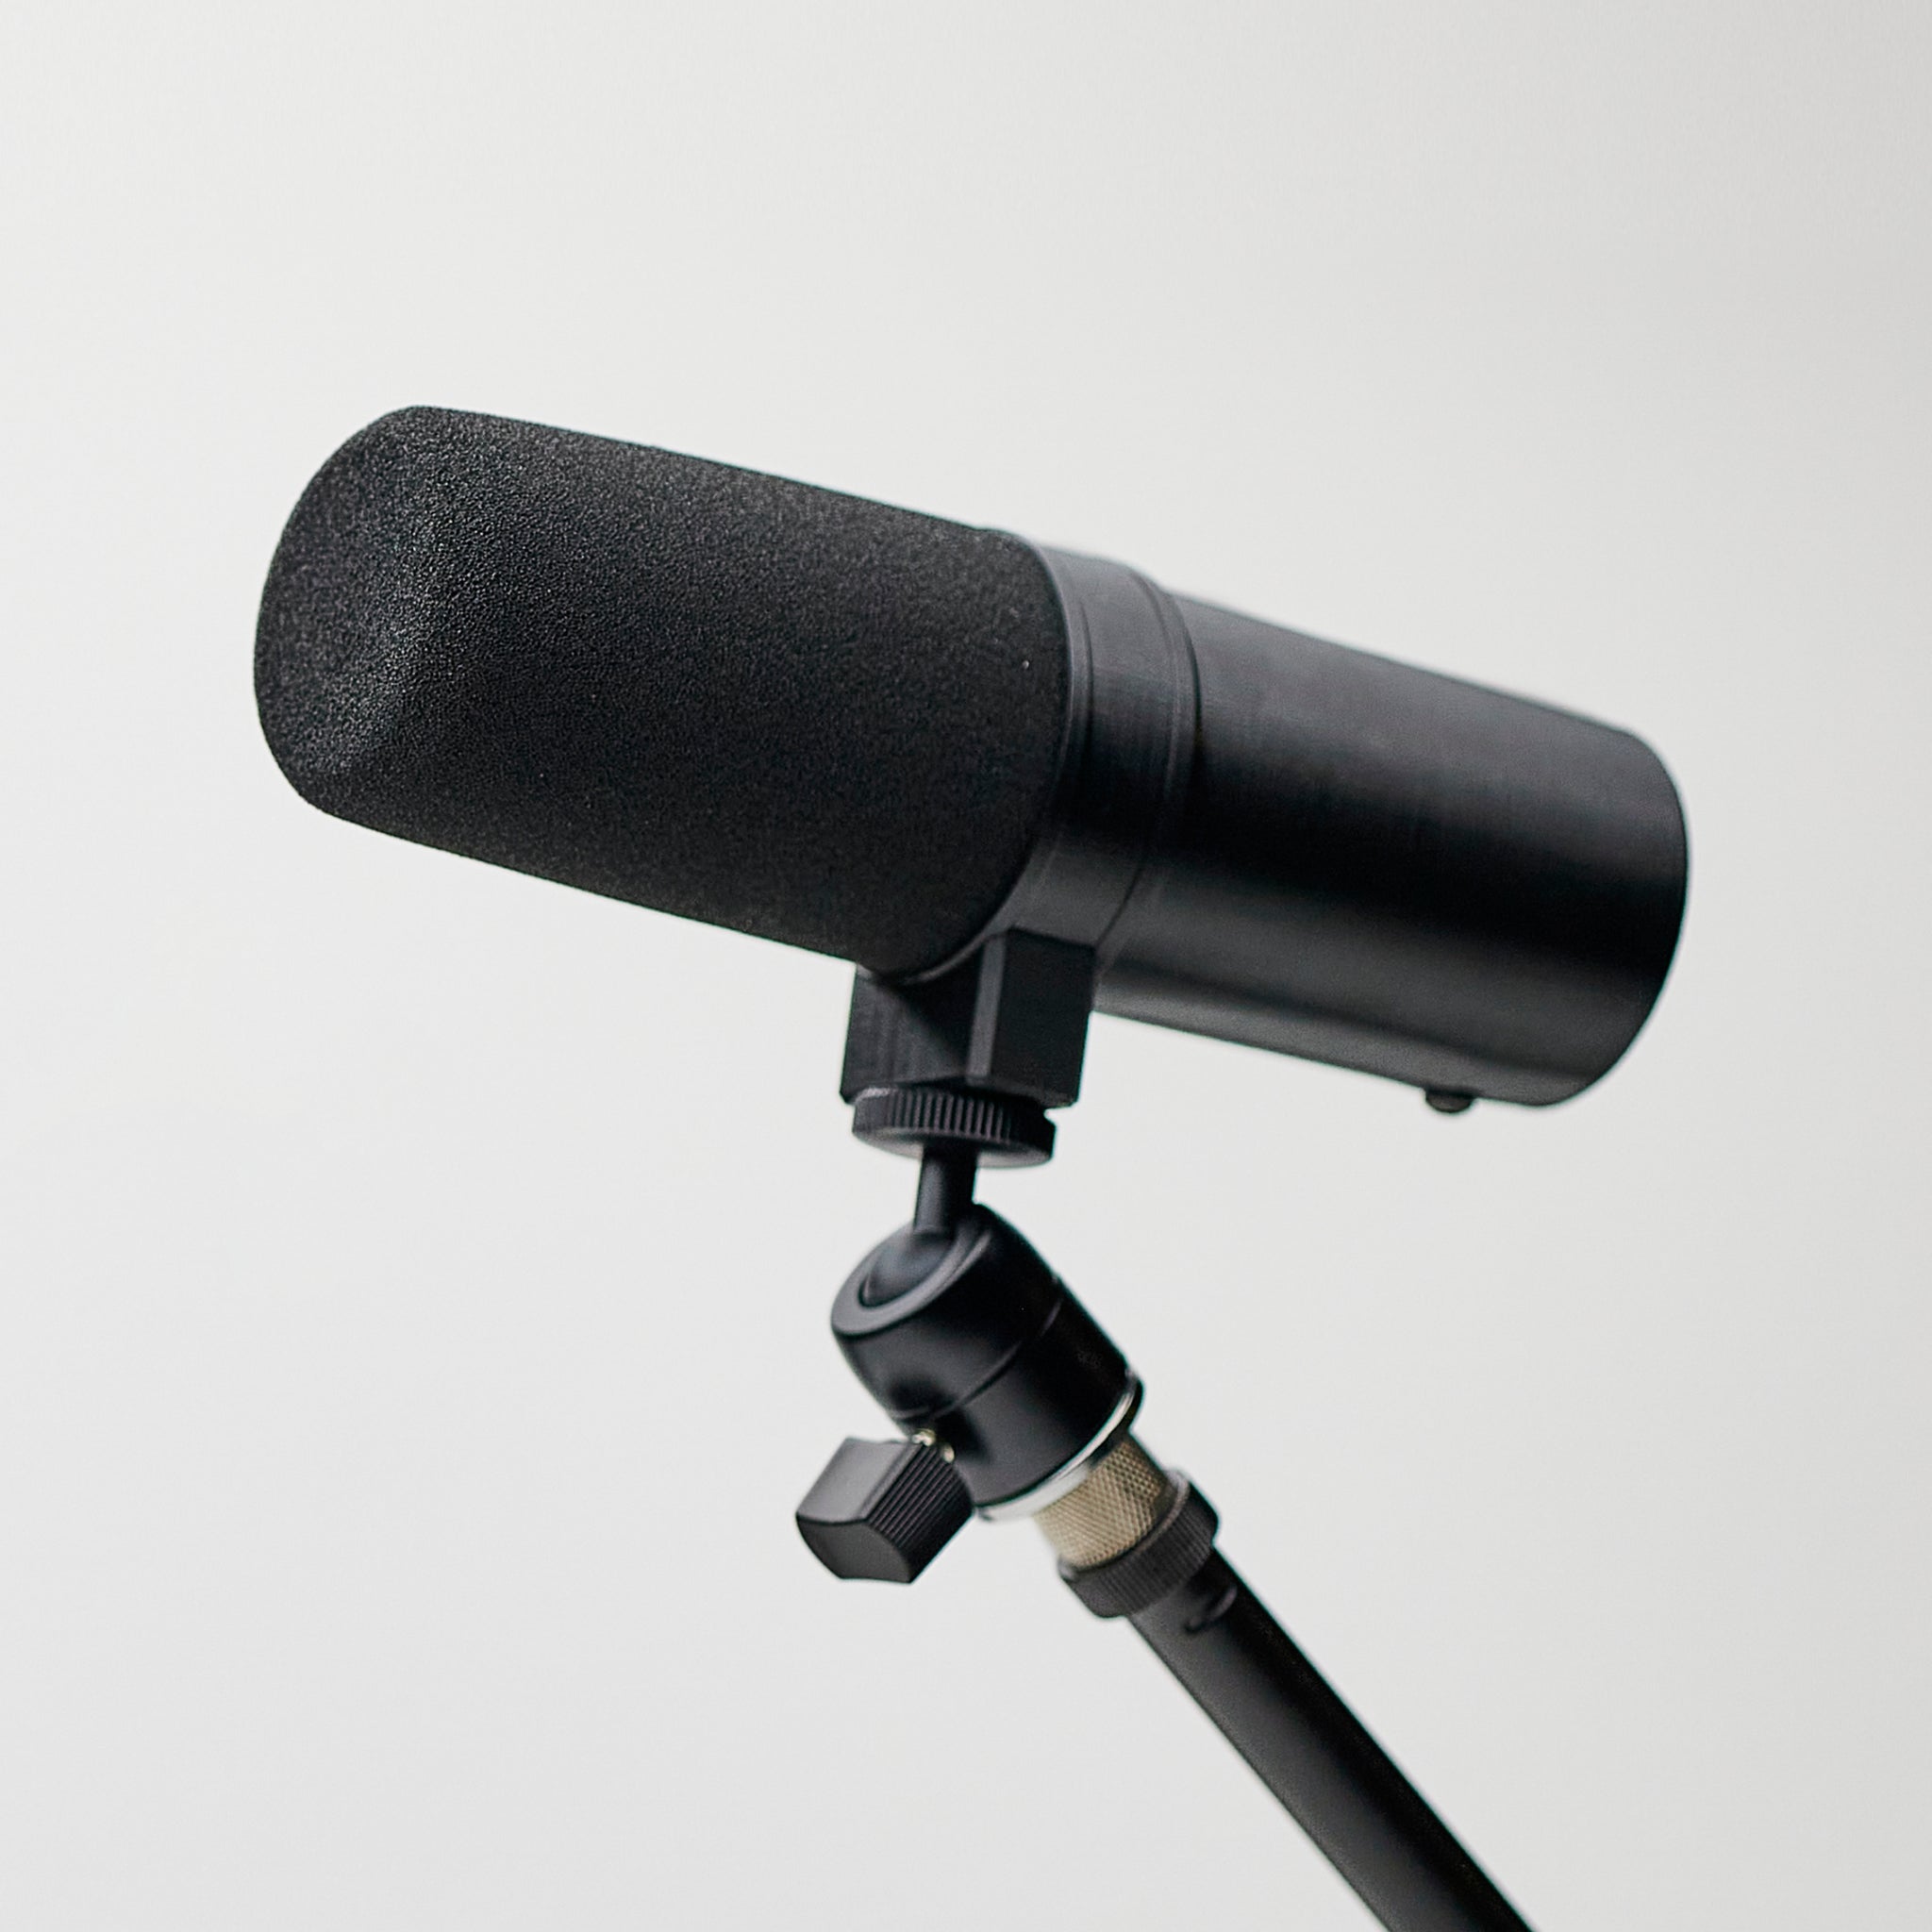 3D microphone shure sm7b - TurboSquid 1655882